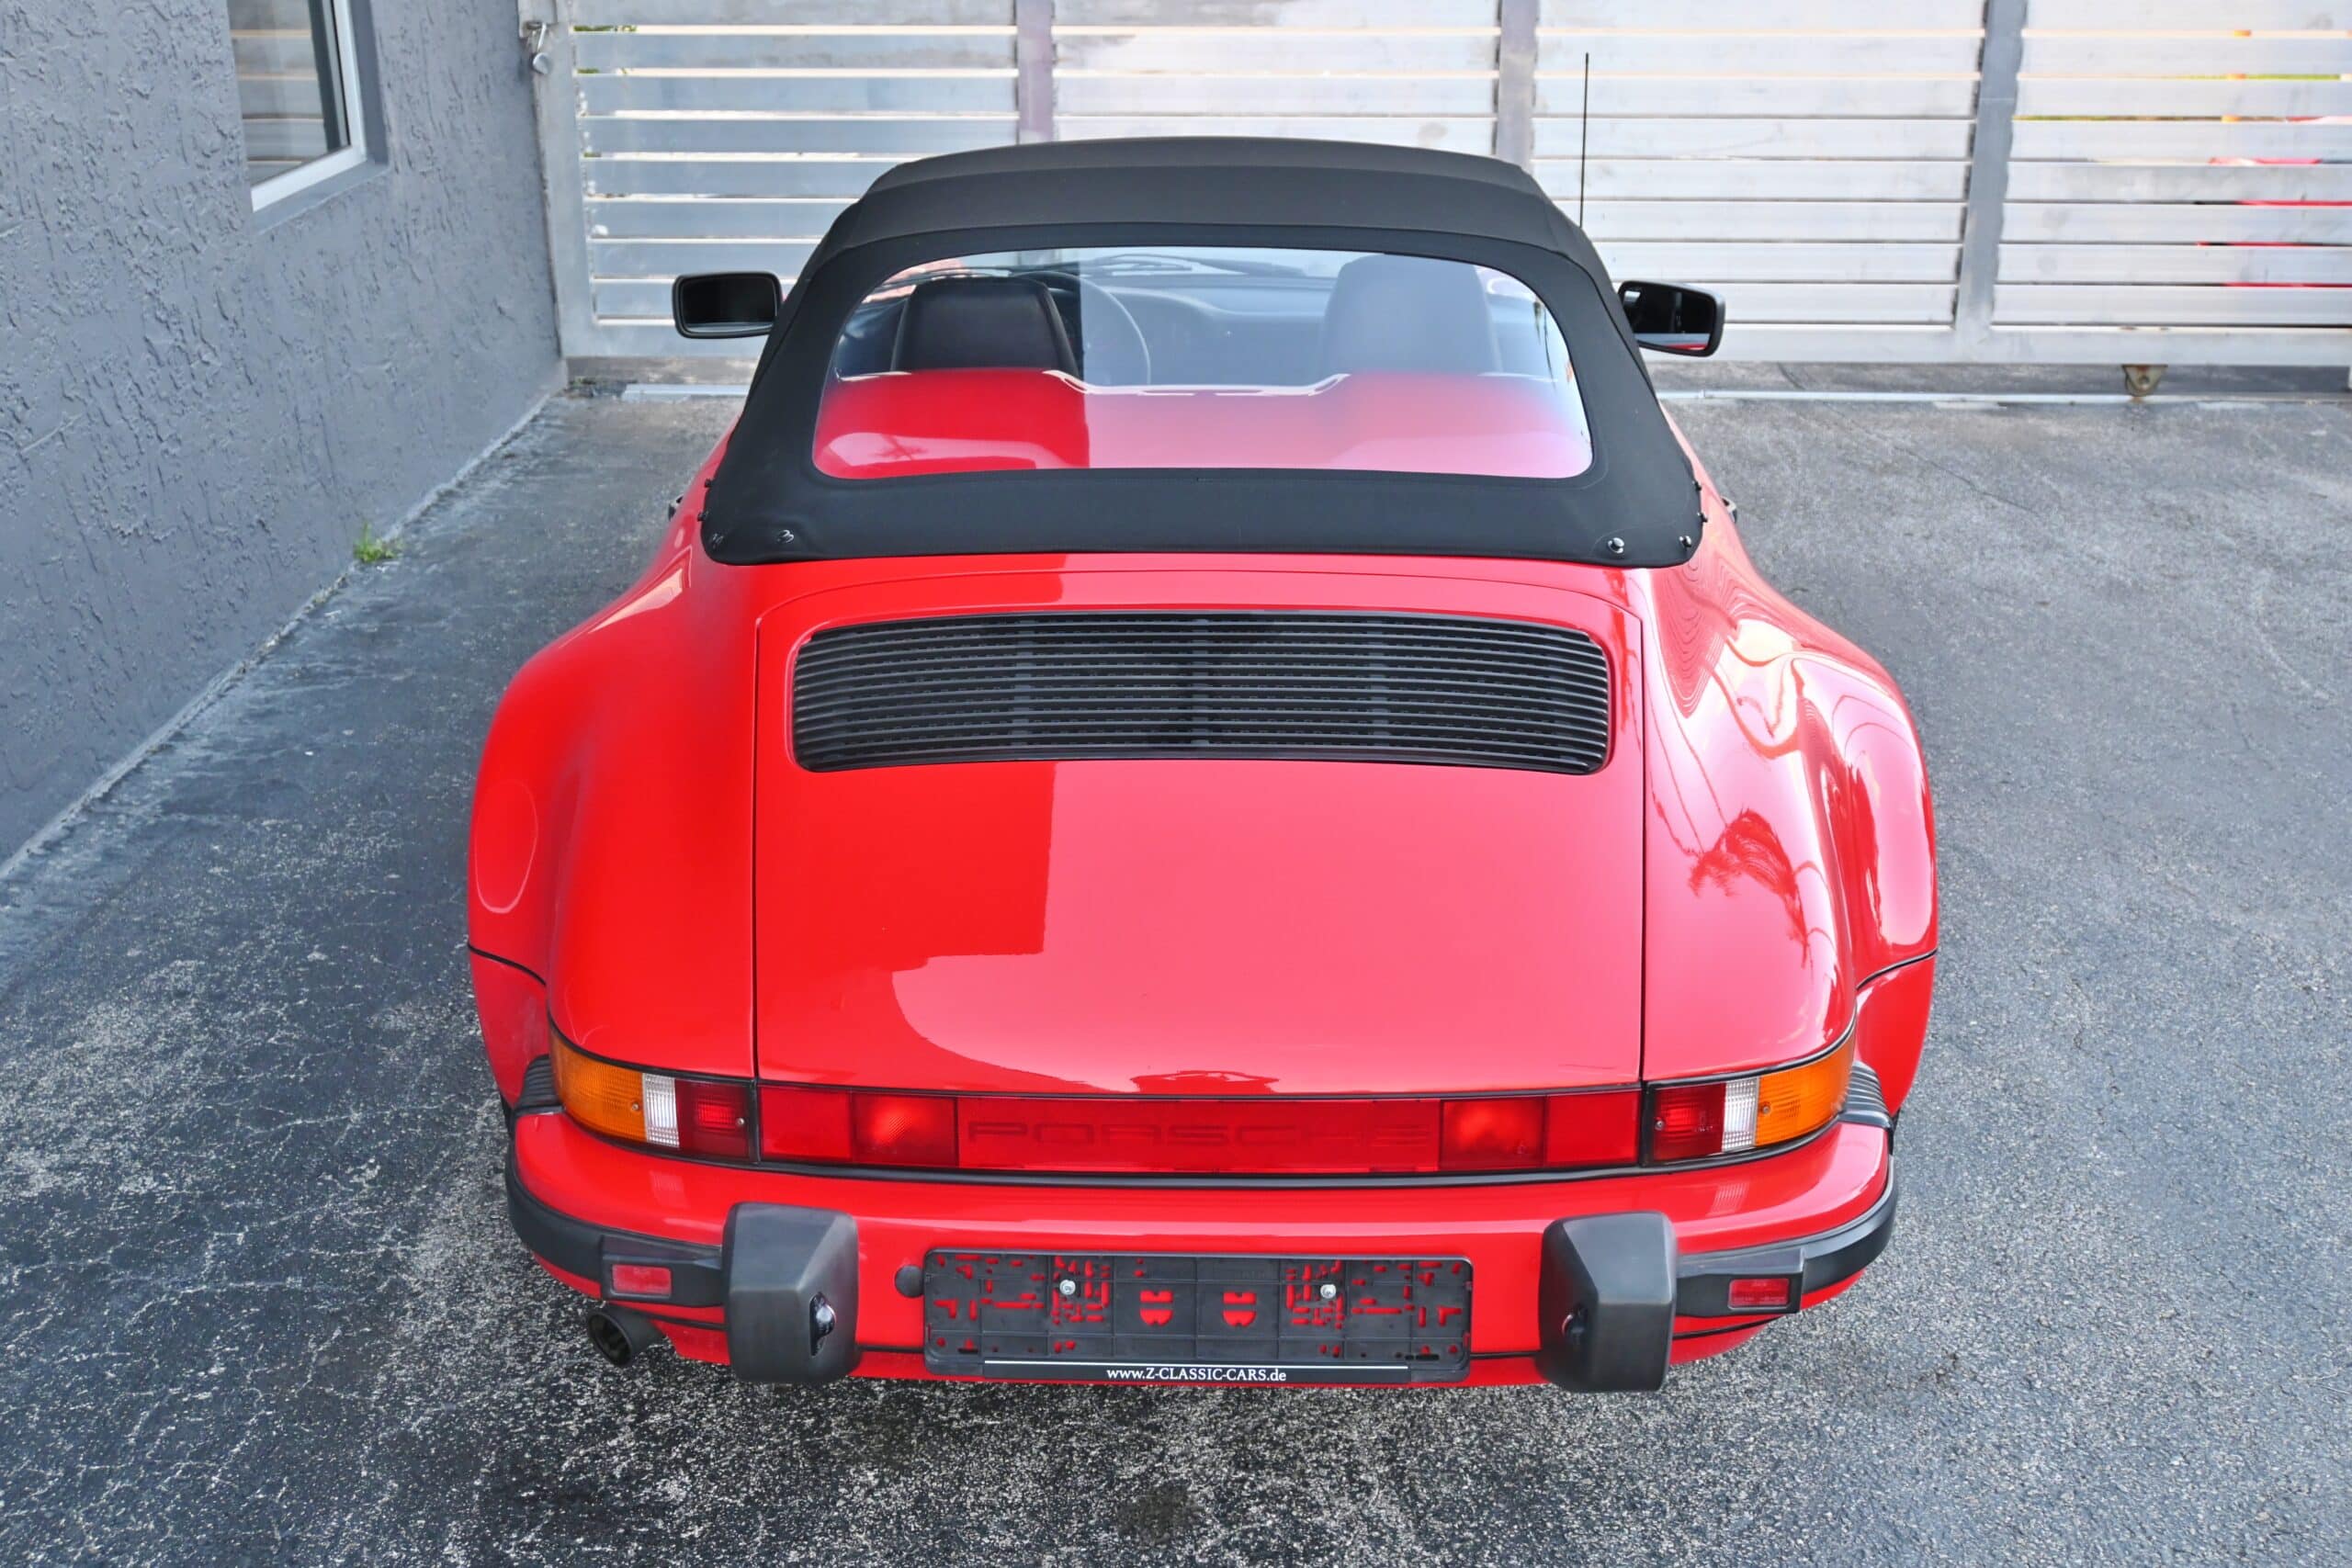 1989 Porsche 911 Speedster Euro -Factory Widebody -Only 33k Miles – Sport Seats – Unmodified – All original